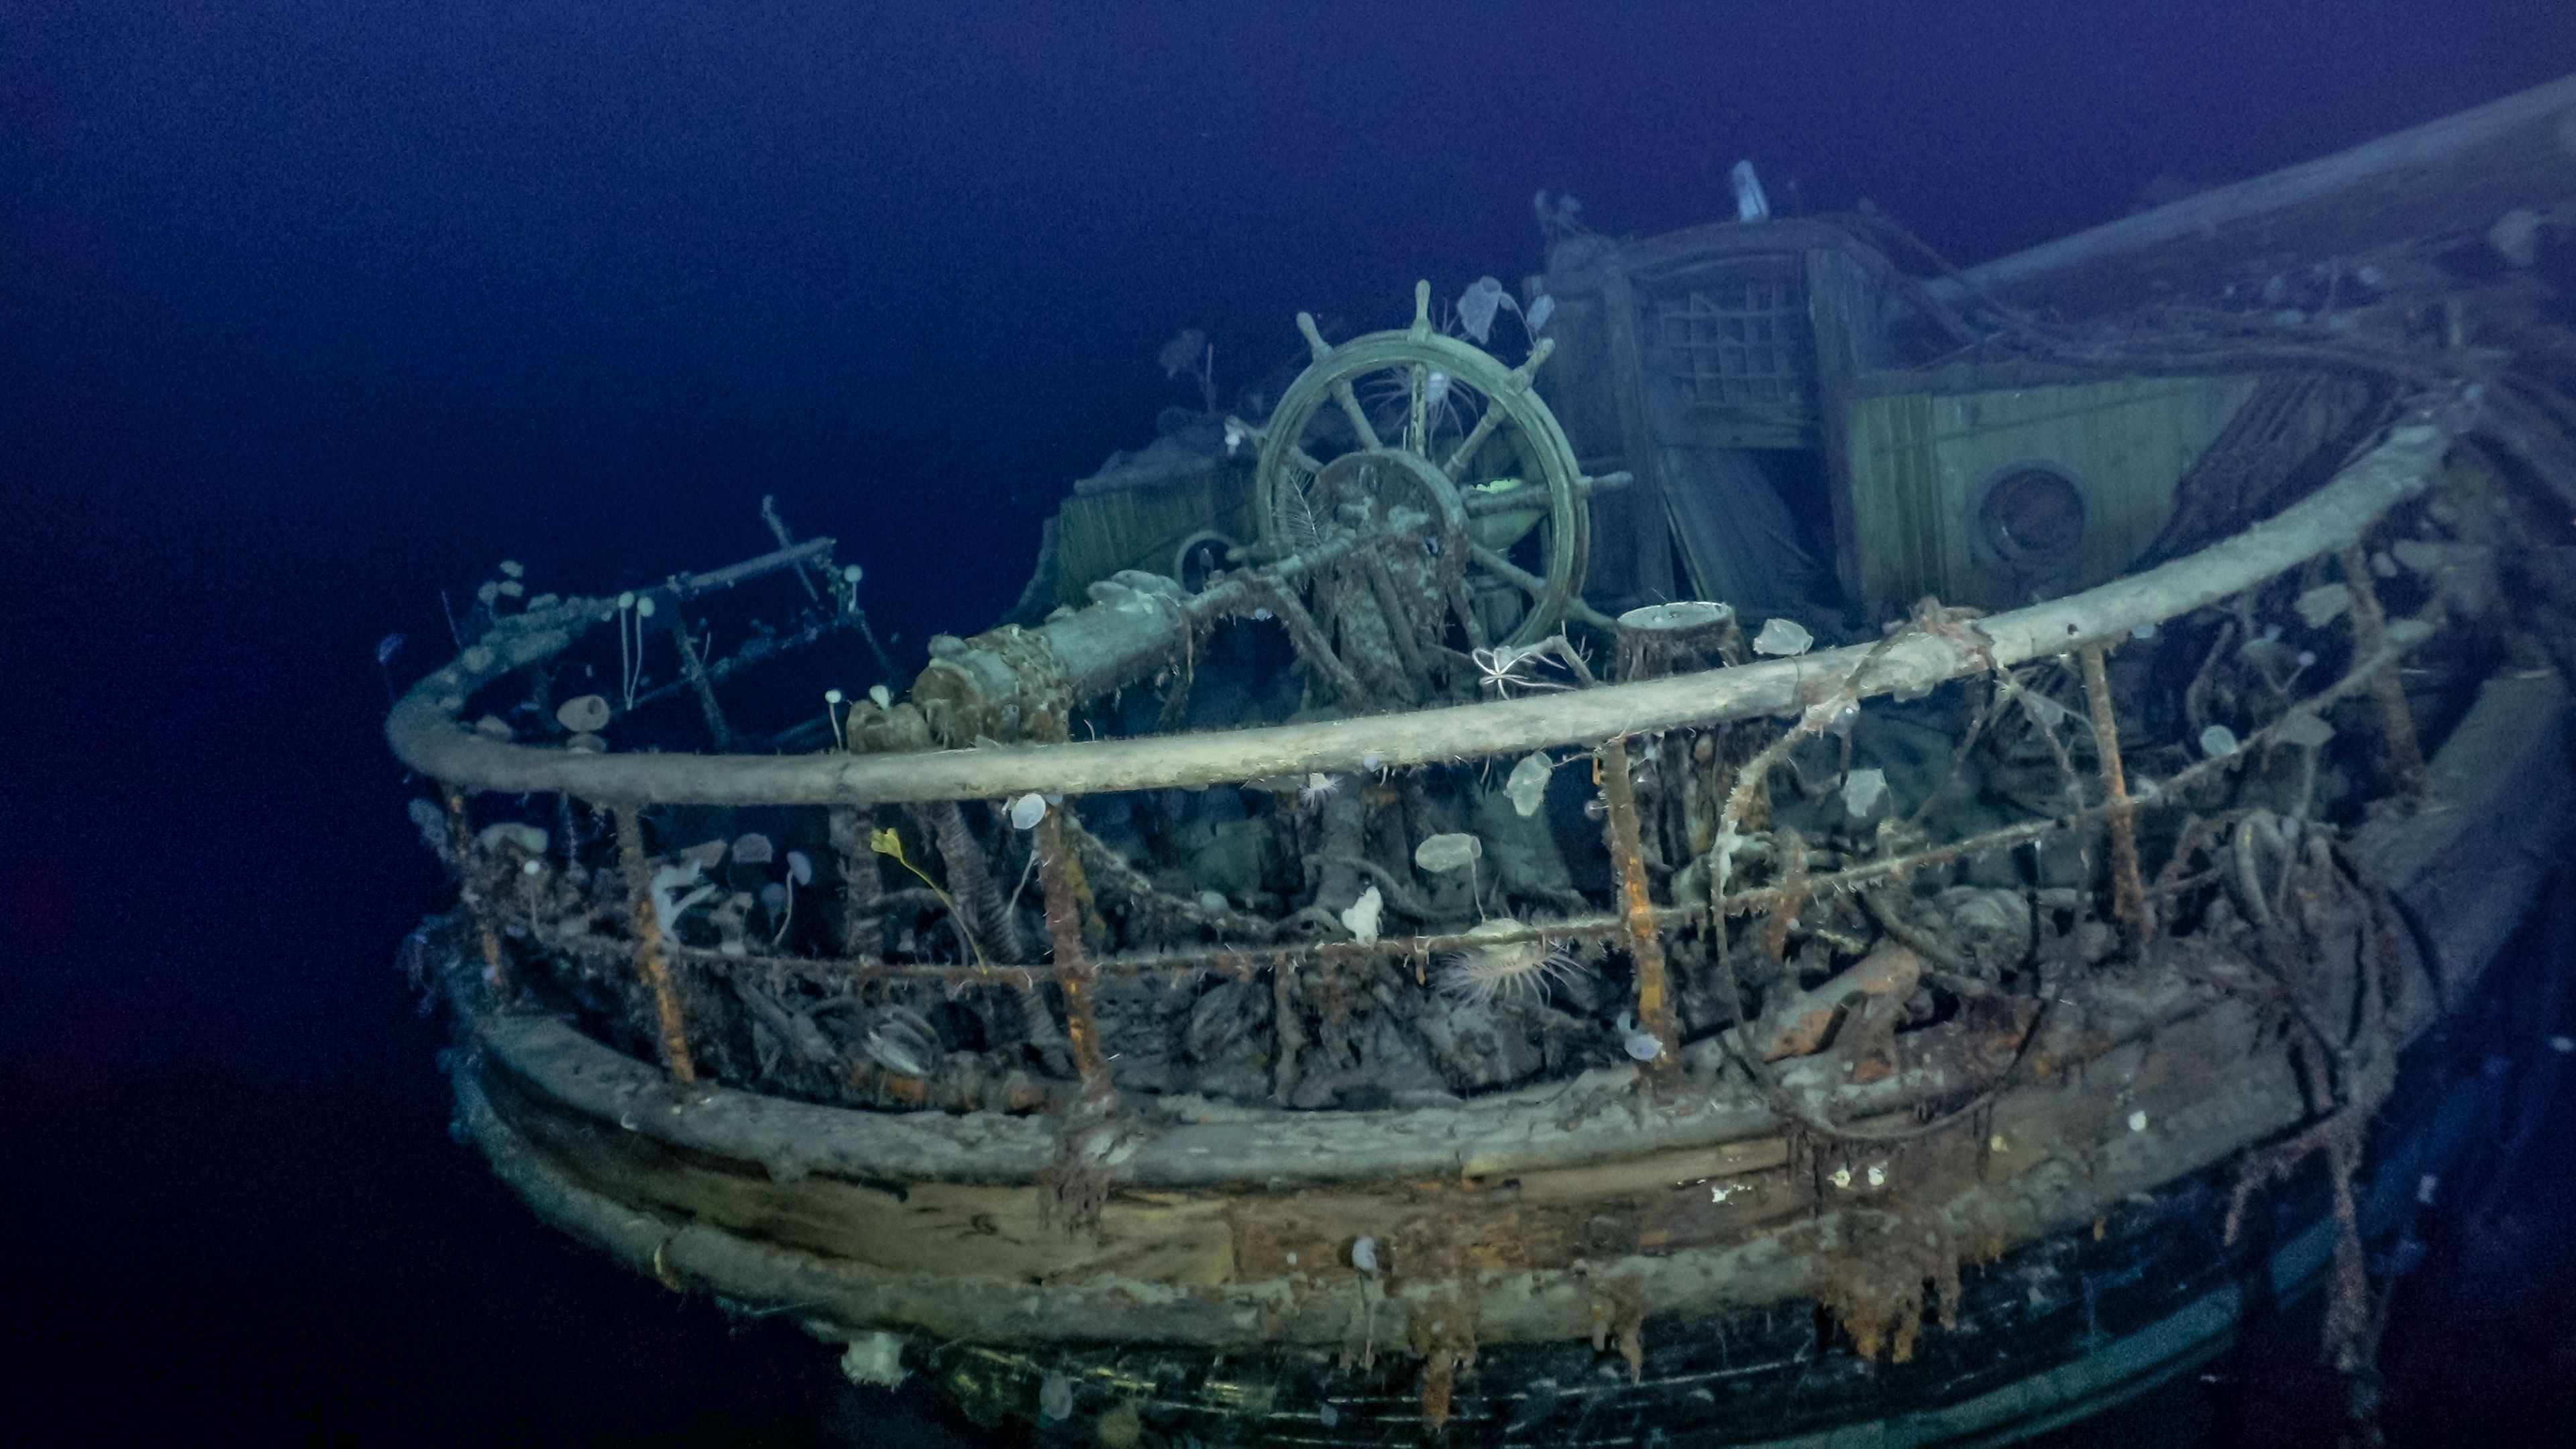 Underwater Pirate Shipwreck